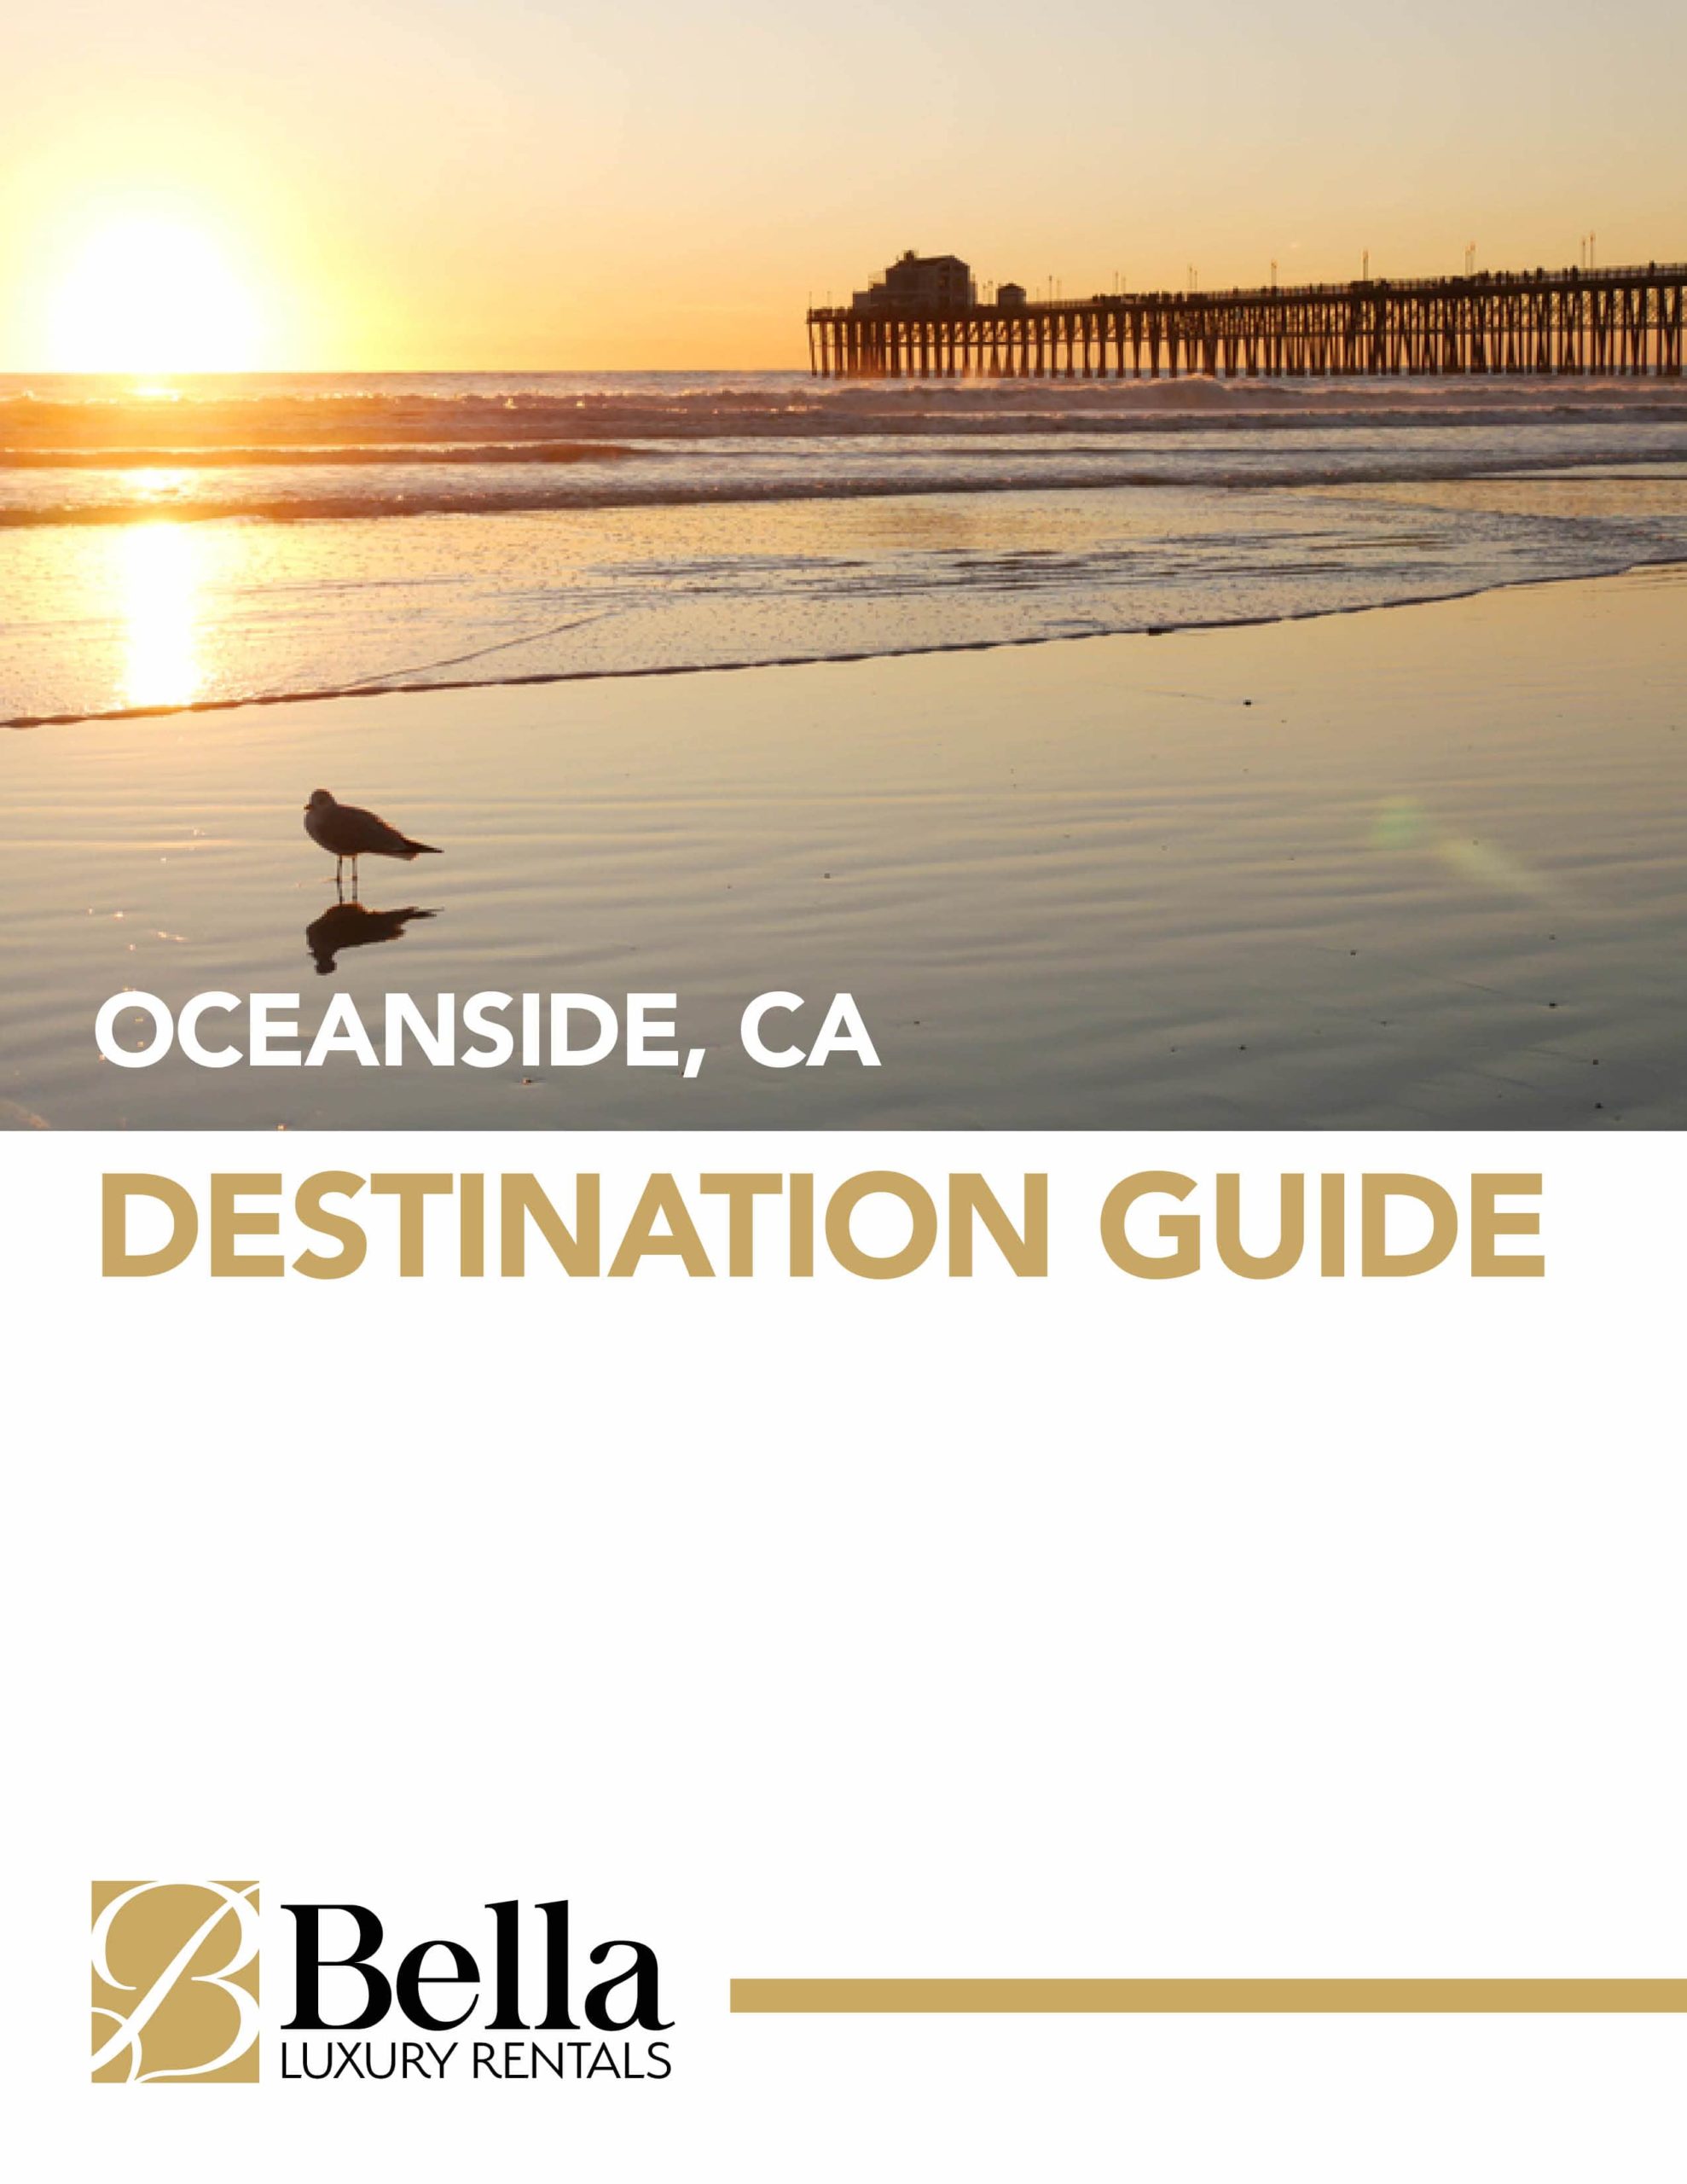 Bella Luxury Rentals - Oceanside Destination Guide